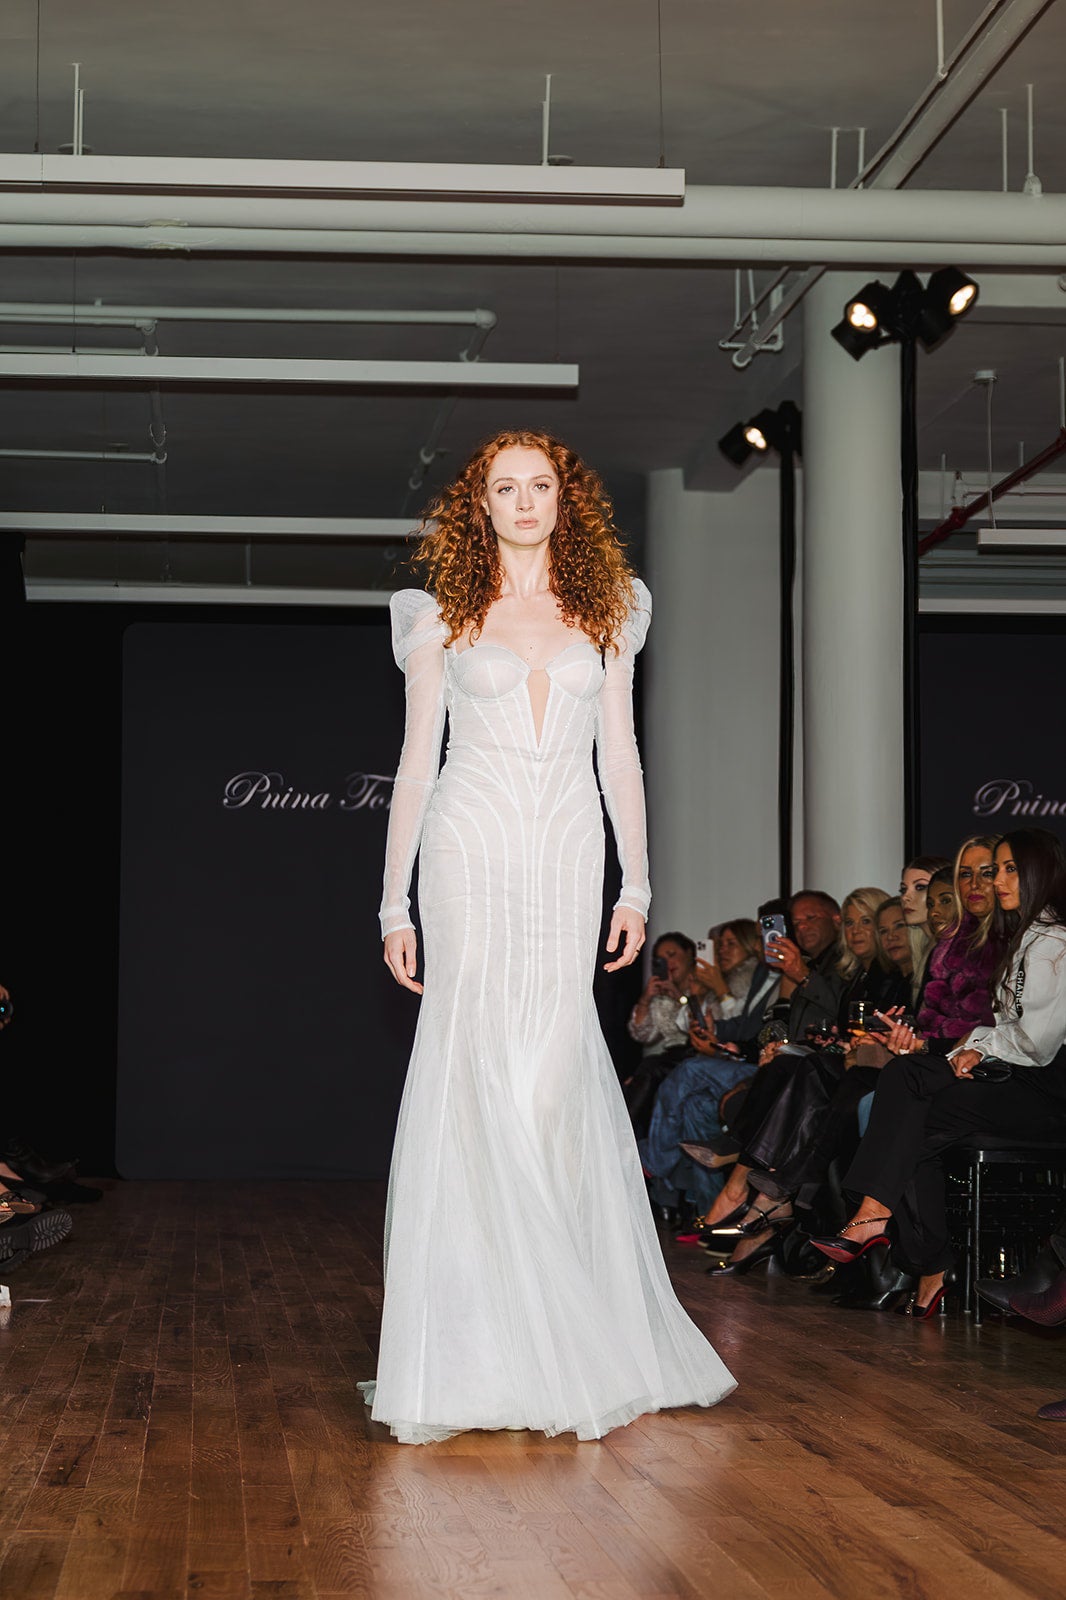 Strapless ballgown with sheer Alençon lace bodice